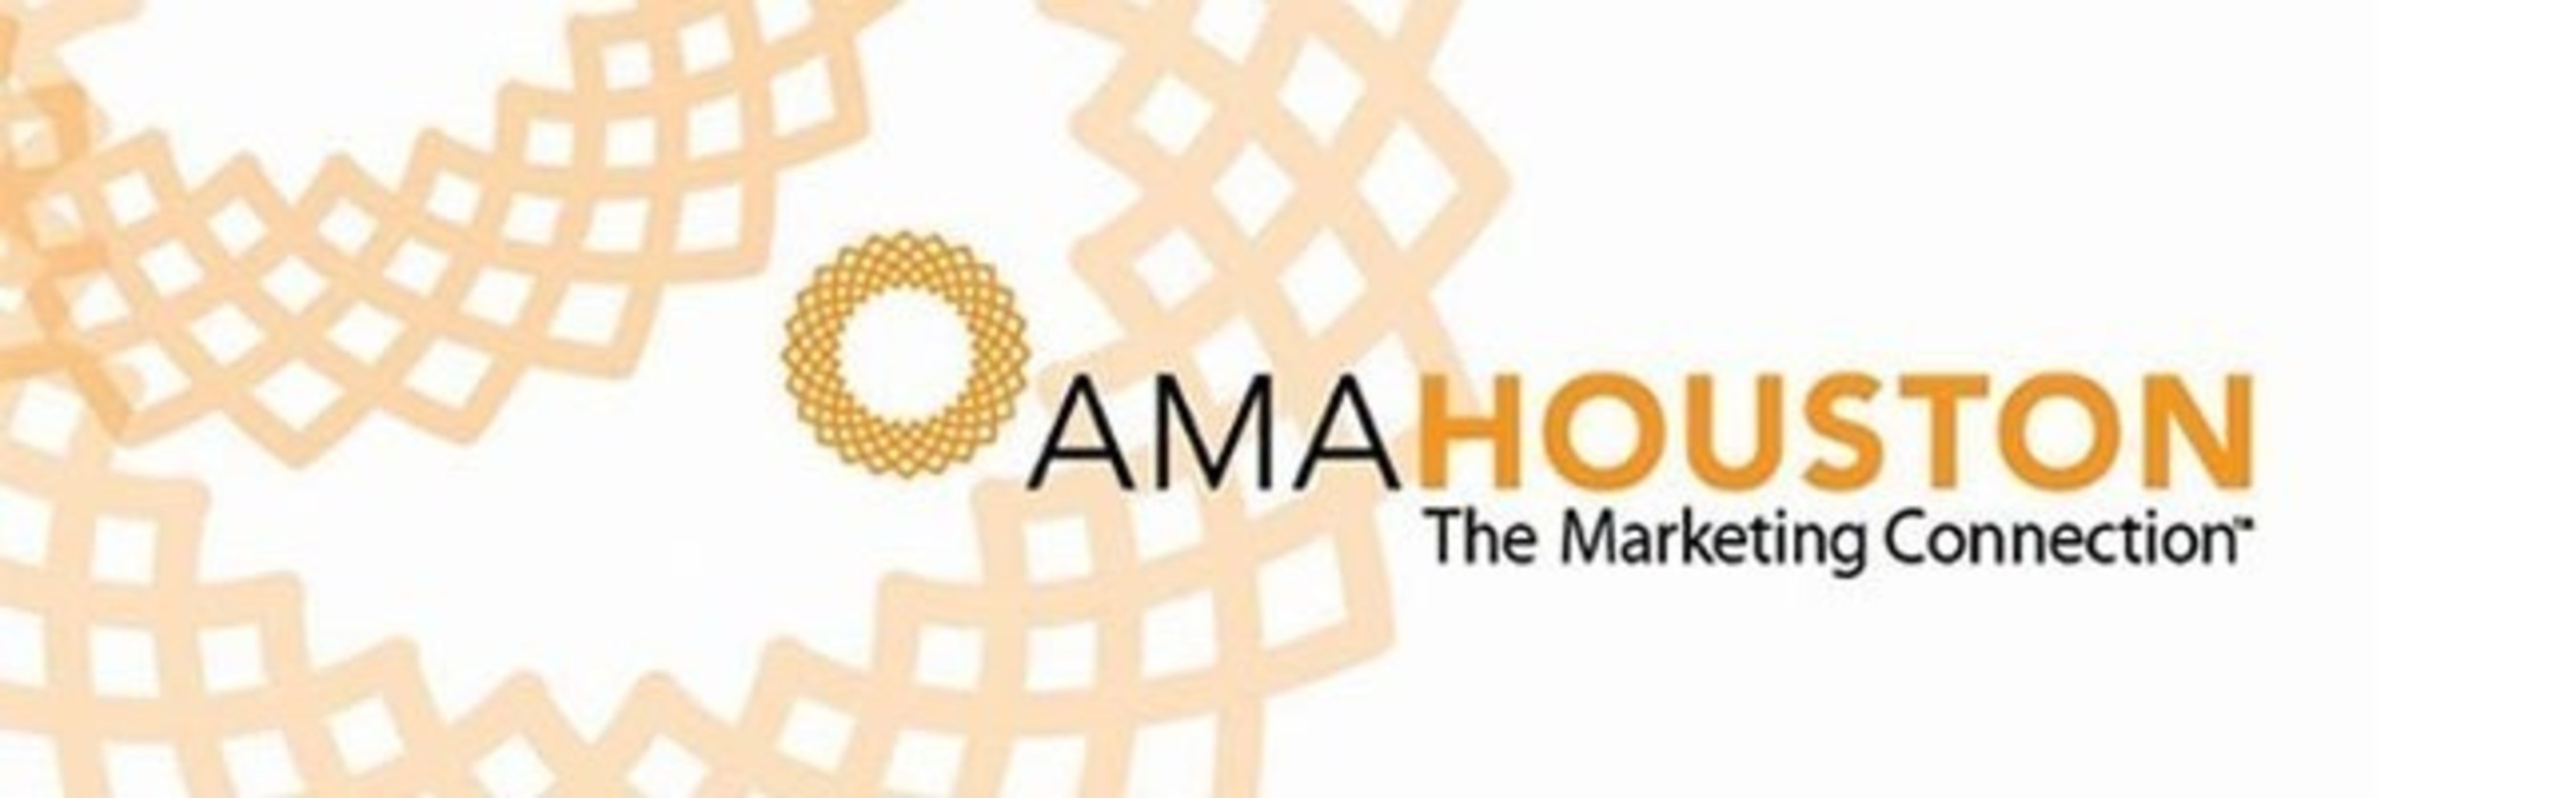 American Marketing Association - Houston Chapter